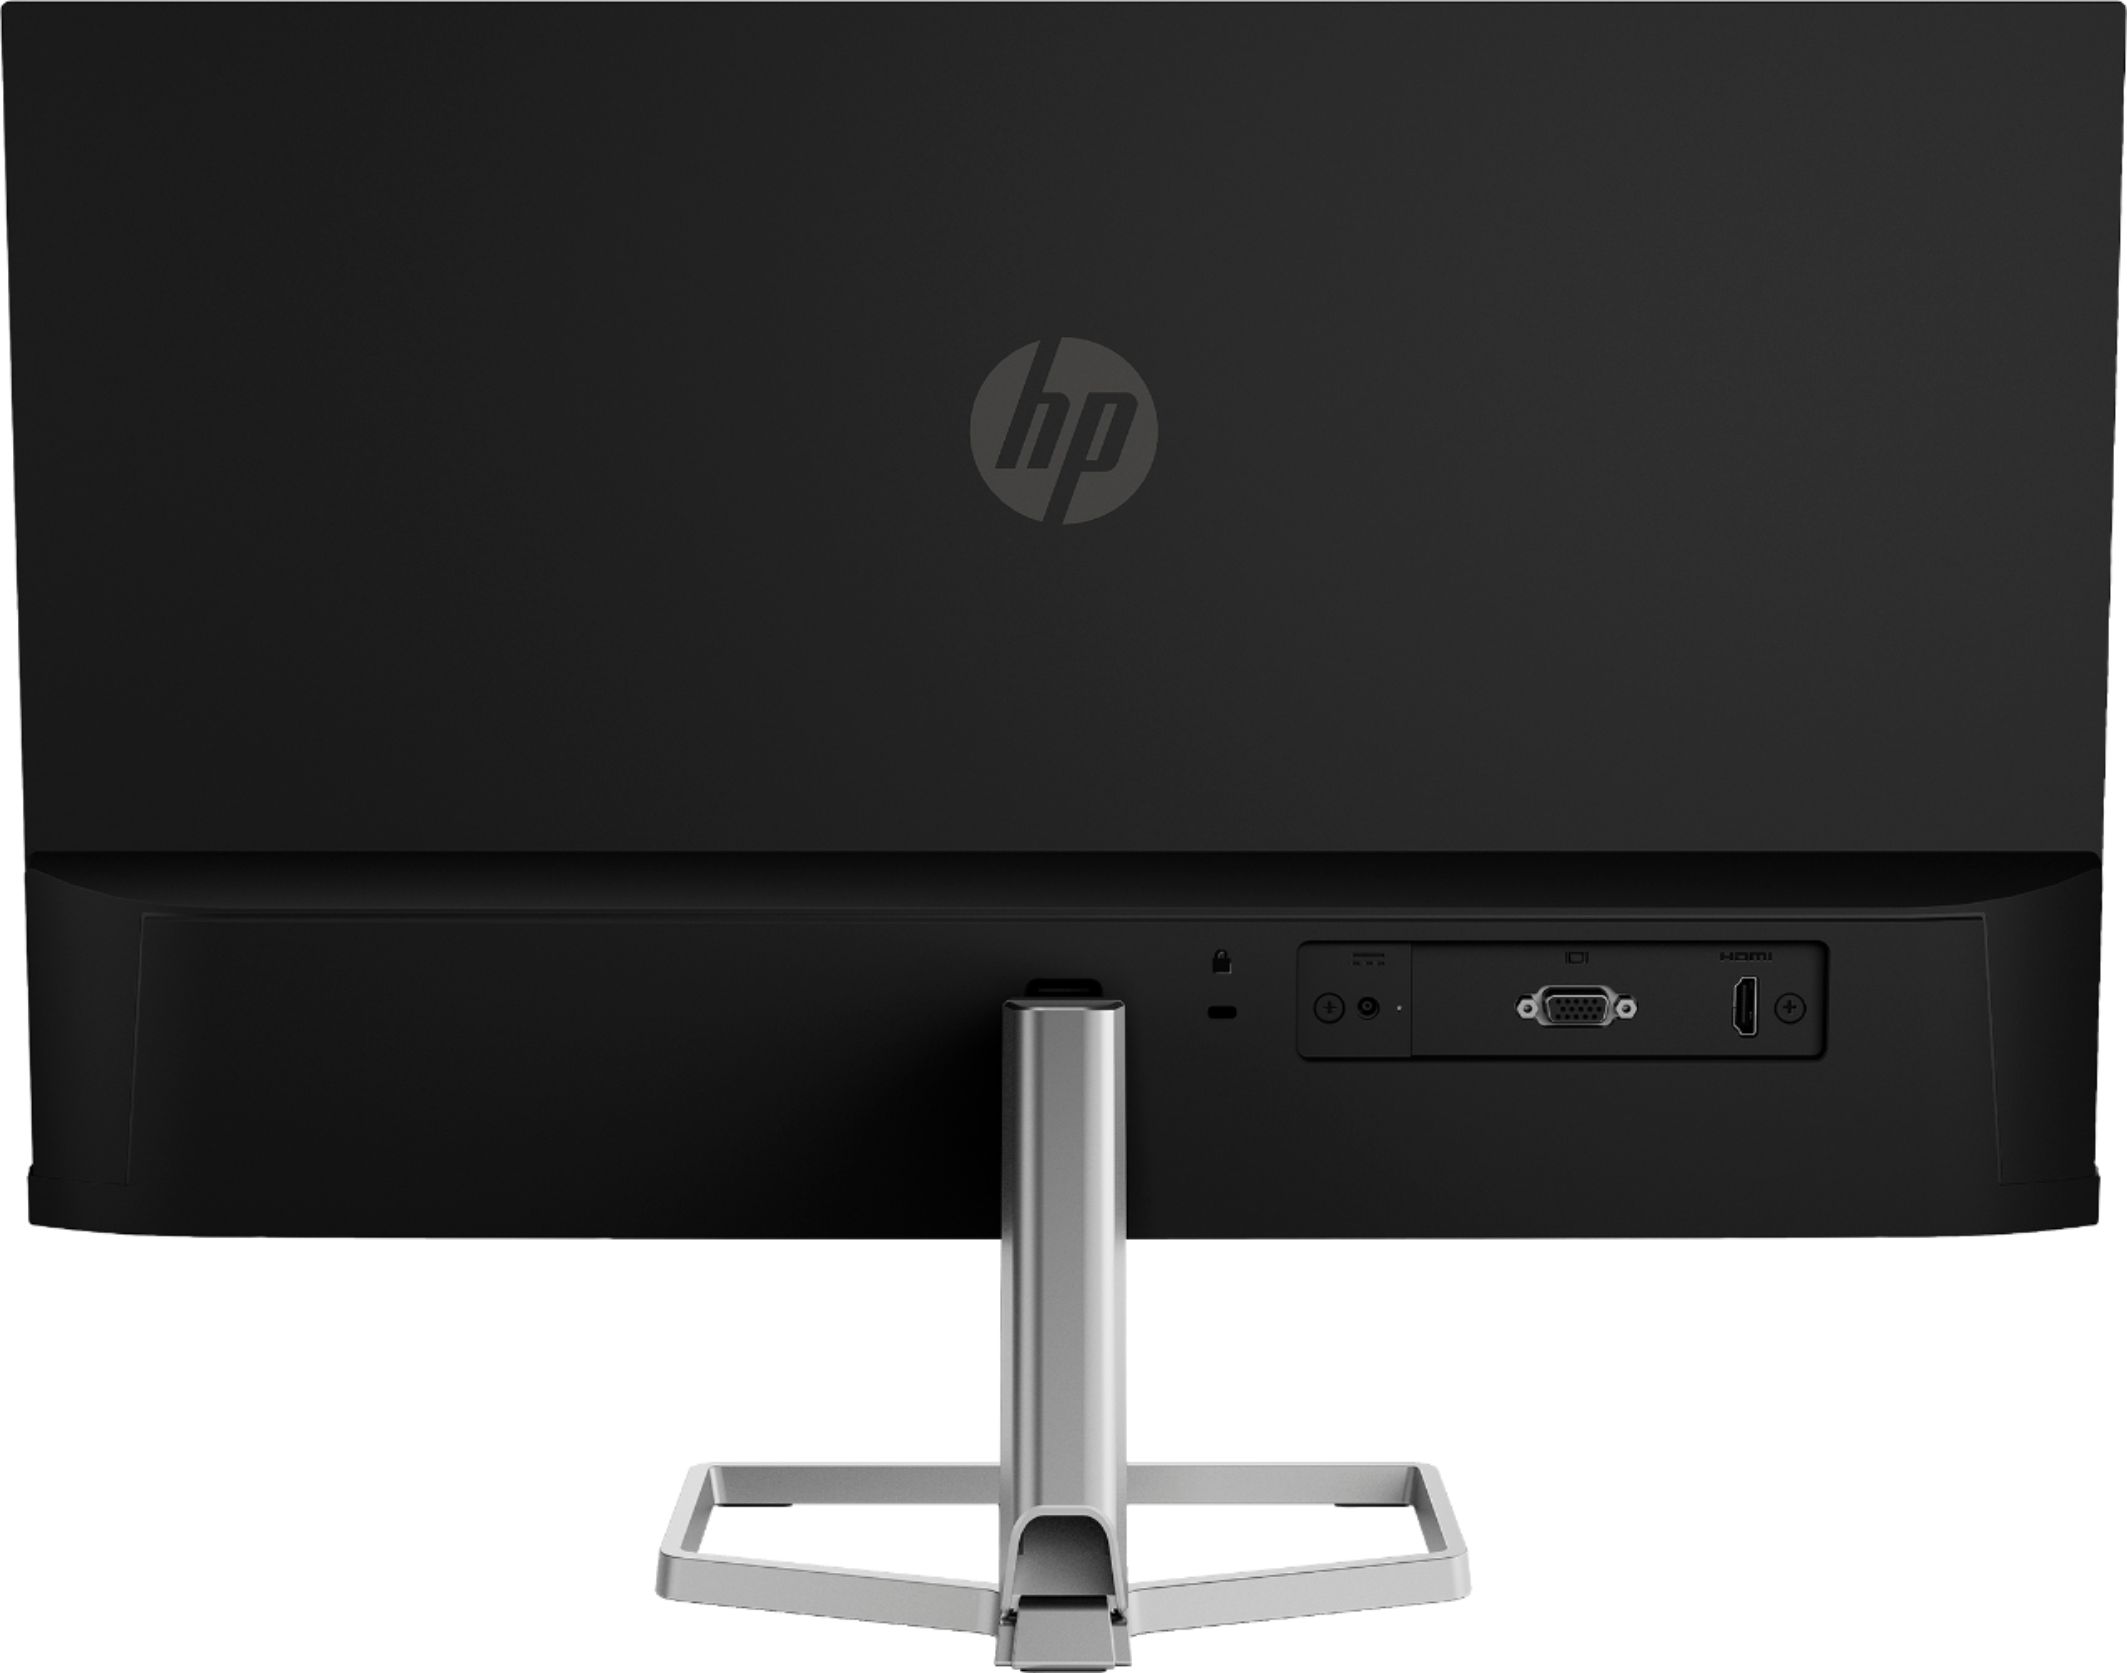 Back View: HP - 24" IPS LED FHD FreeSync Monitor (HDMI, VGA) - Silver and Black